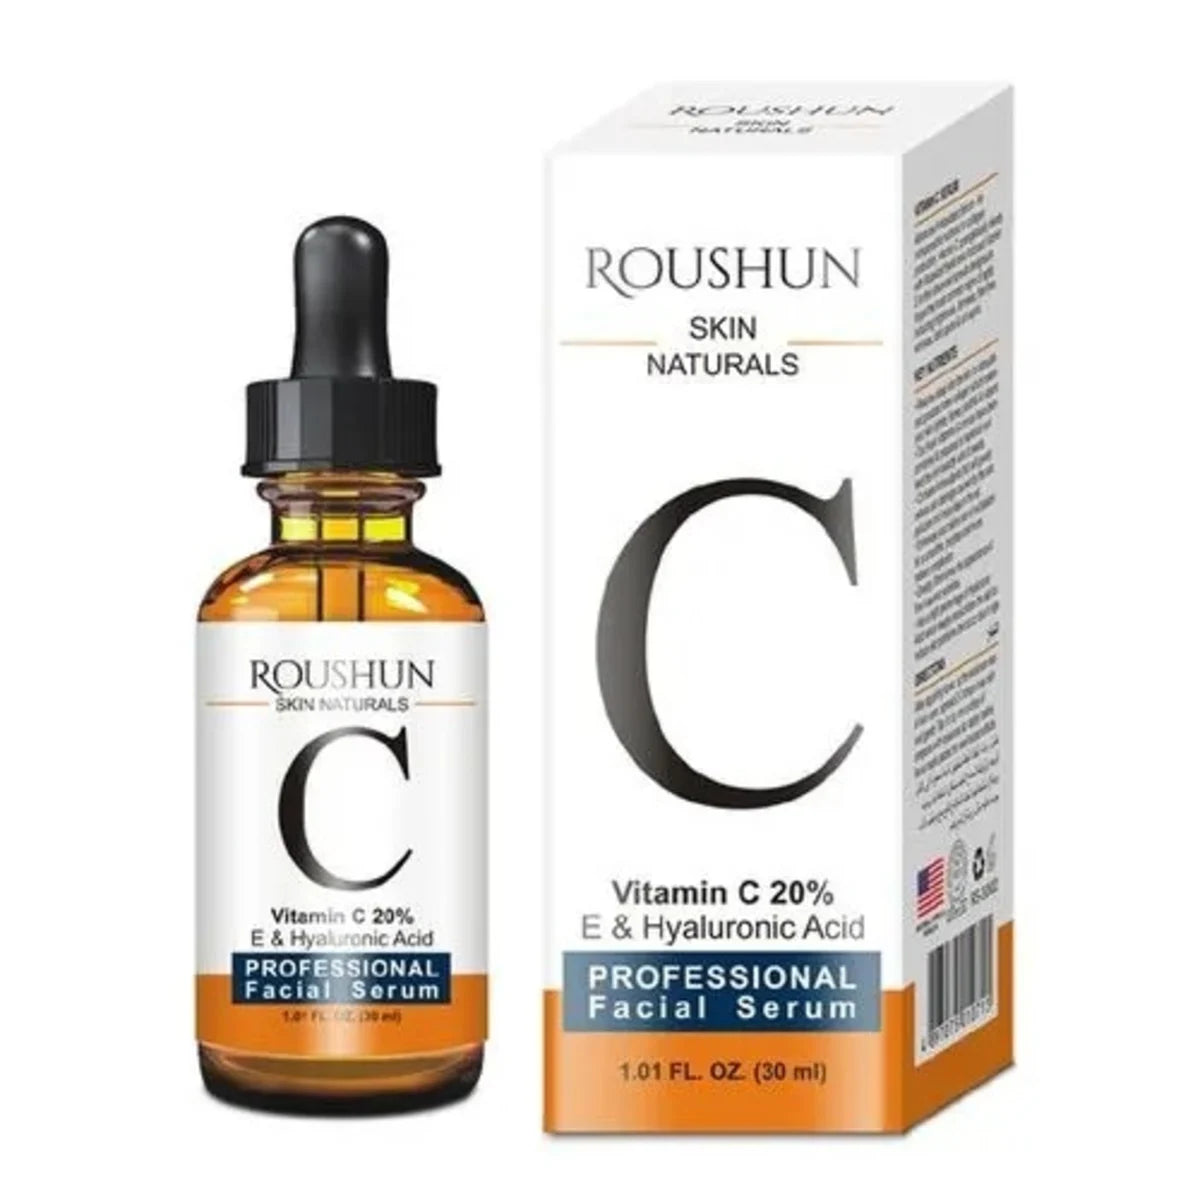 Roushun C Vitamin C 20% Facial Serum (30ML)